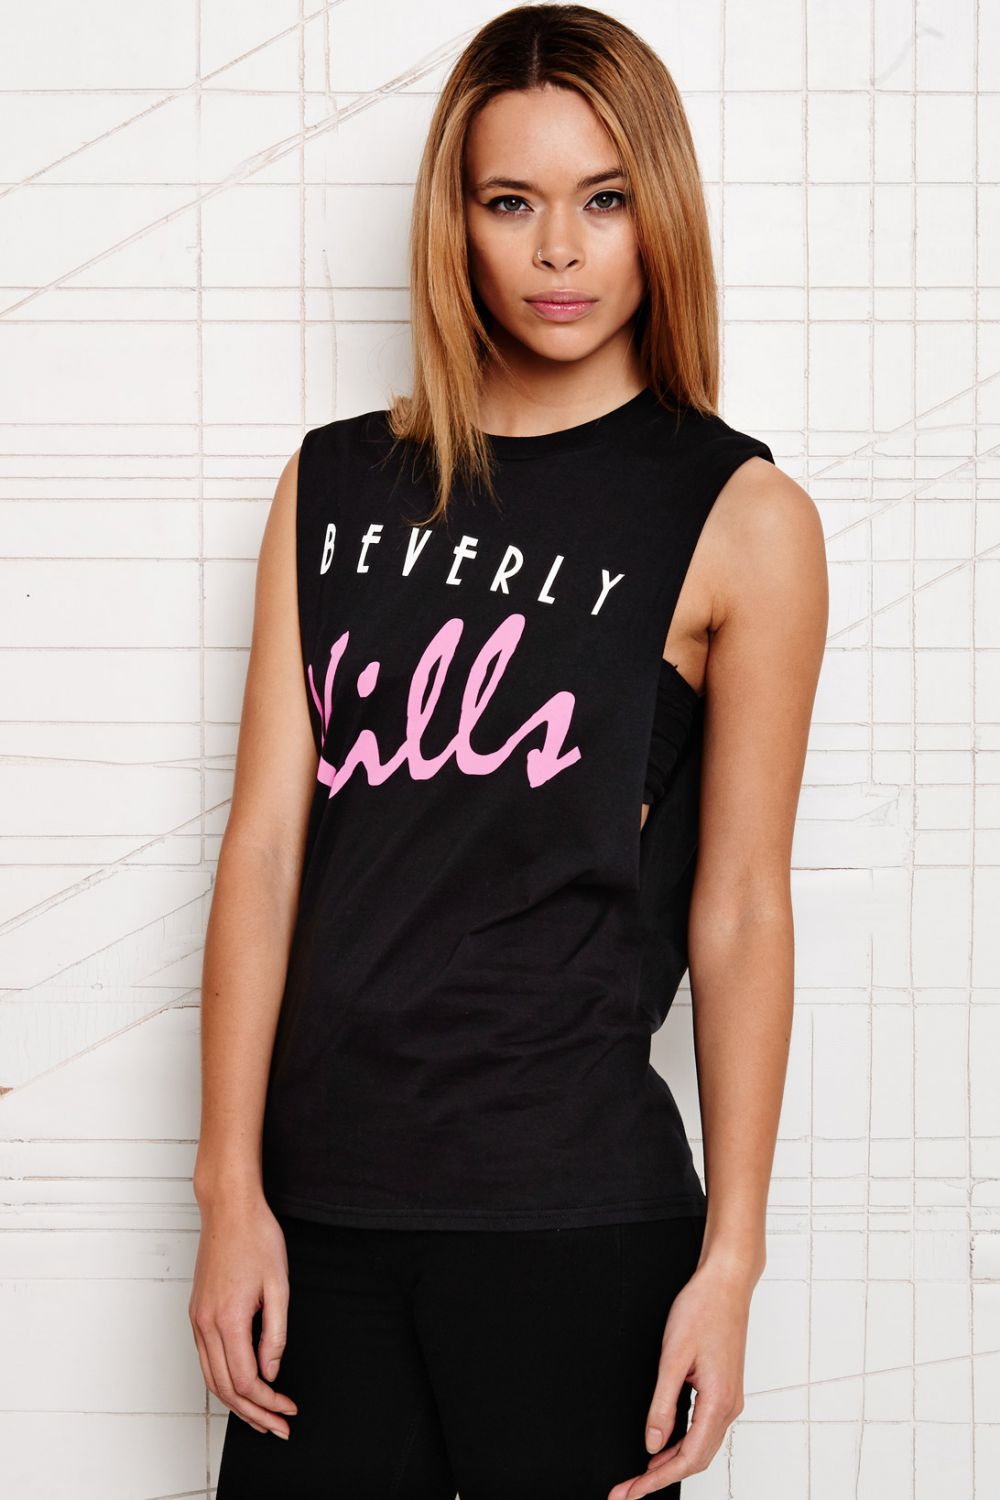 Top "Beverly Kills", Terrible Movement, 42 €